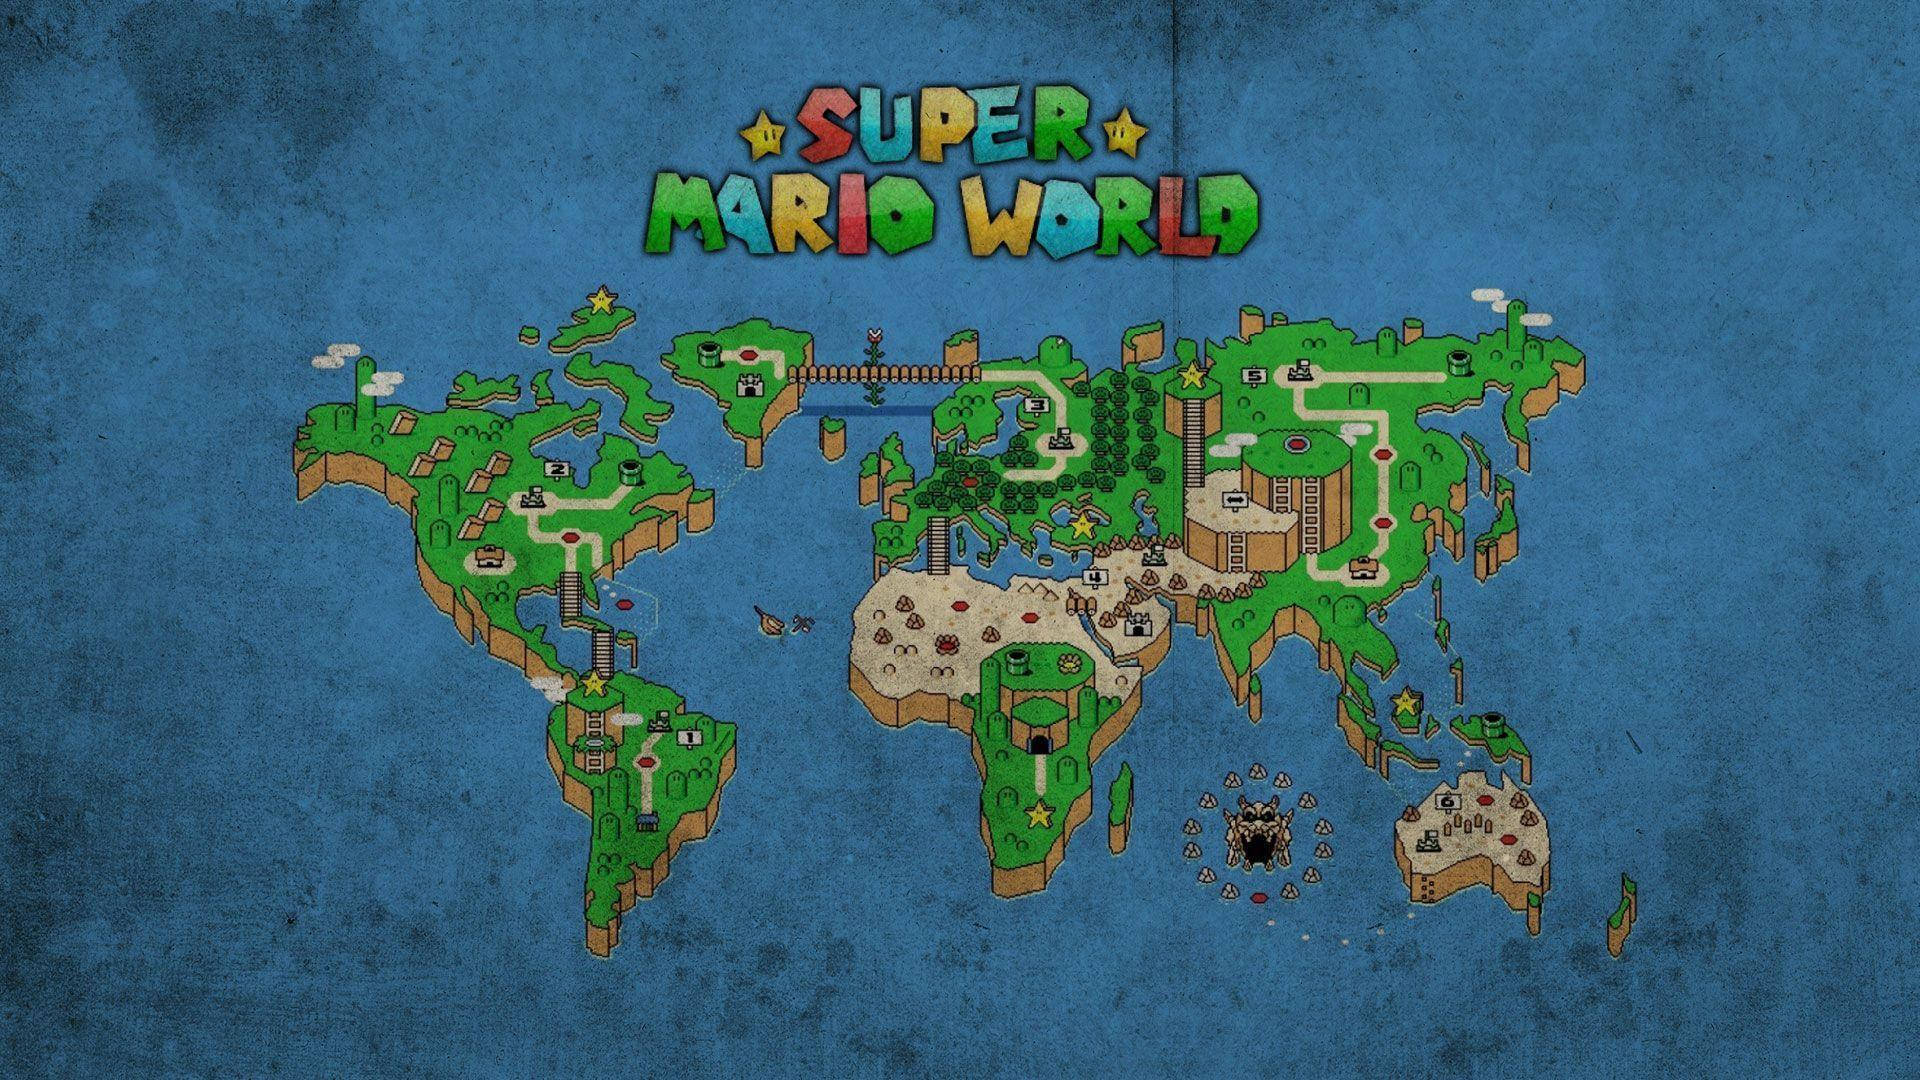 Super mario world. Марио ворлд. Марио карта мира. Карта мира ворлд бокс. Карта мира животные.